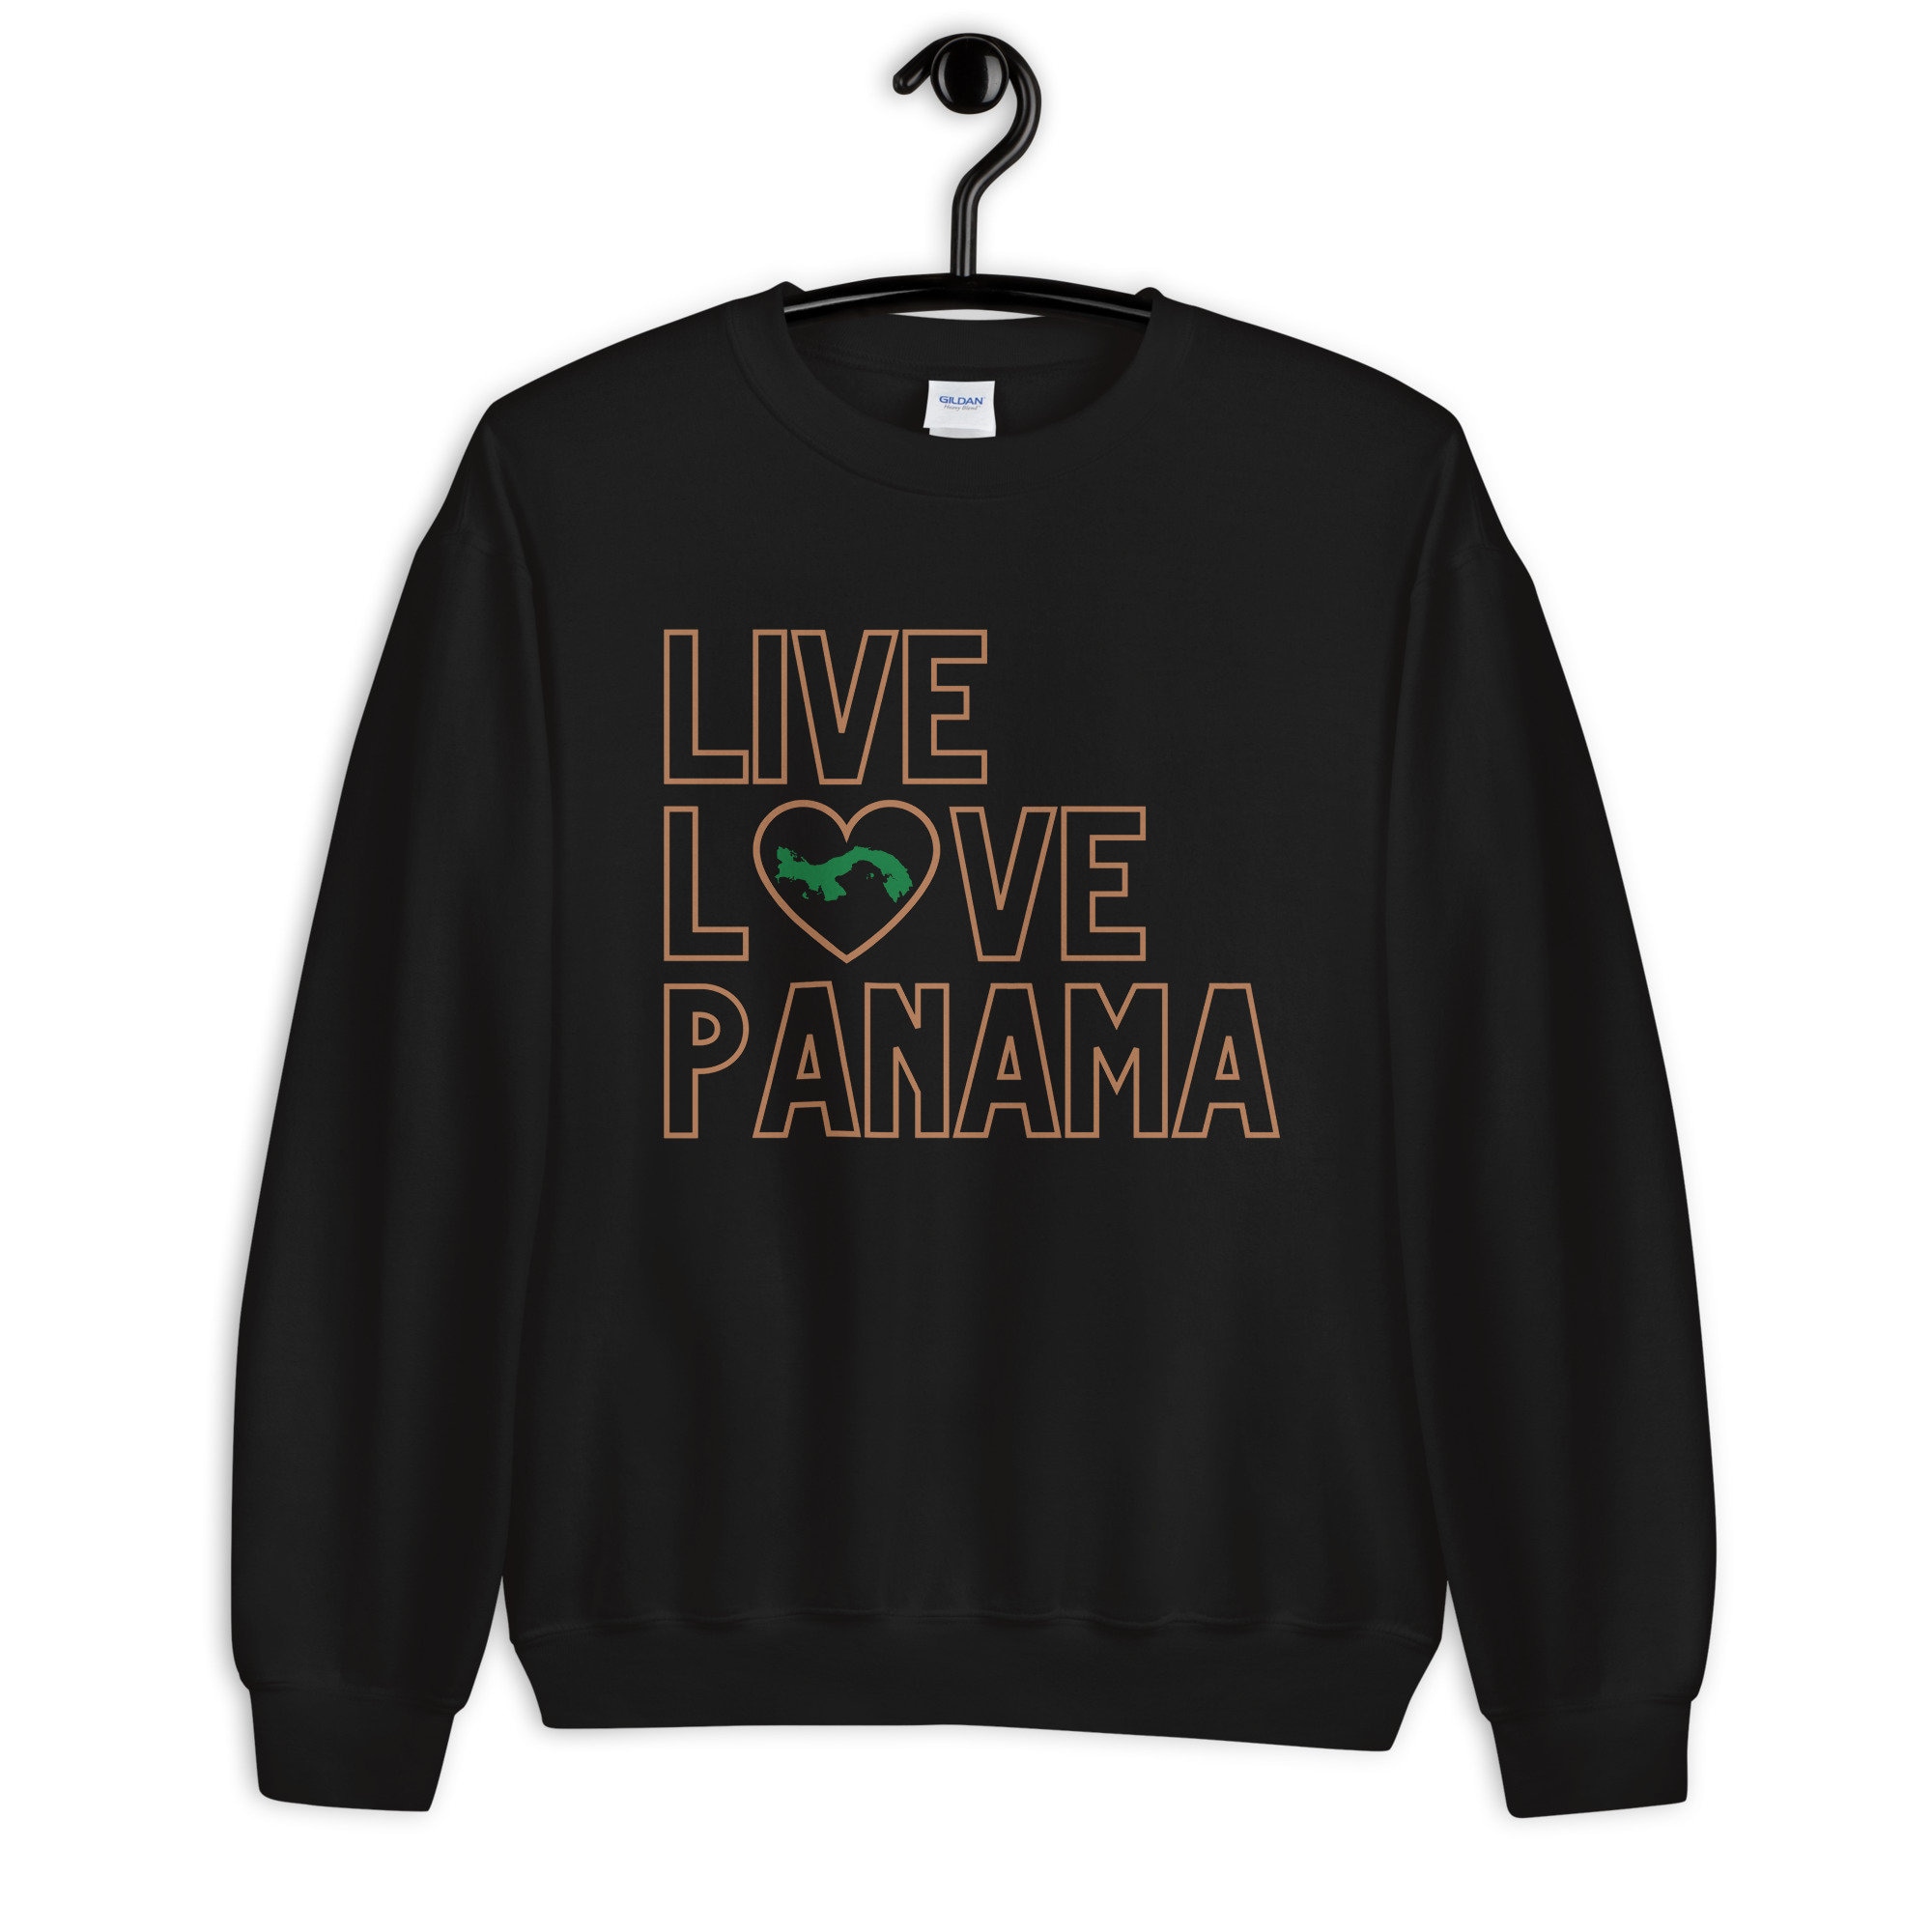 Made in Panama Unisex Sweatshirt